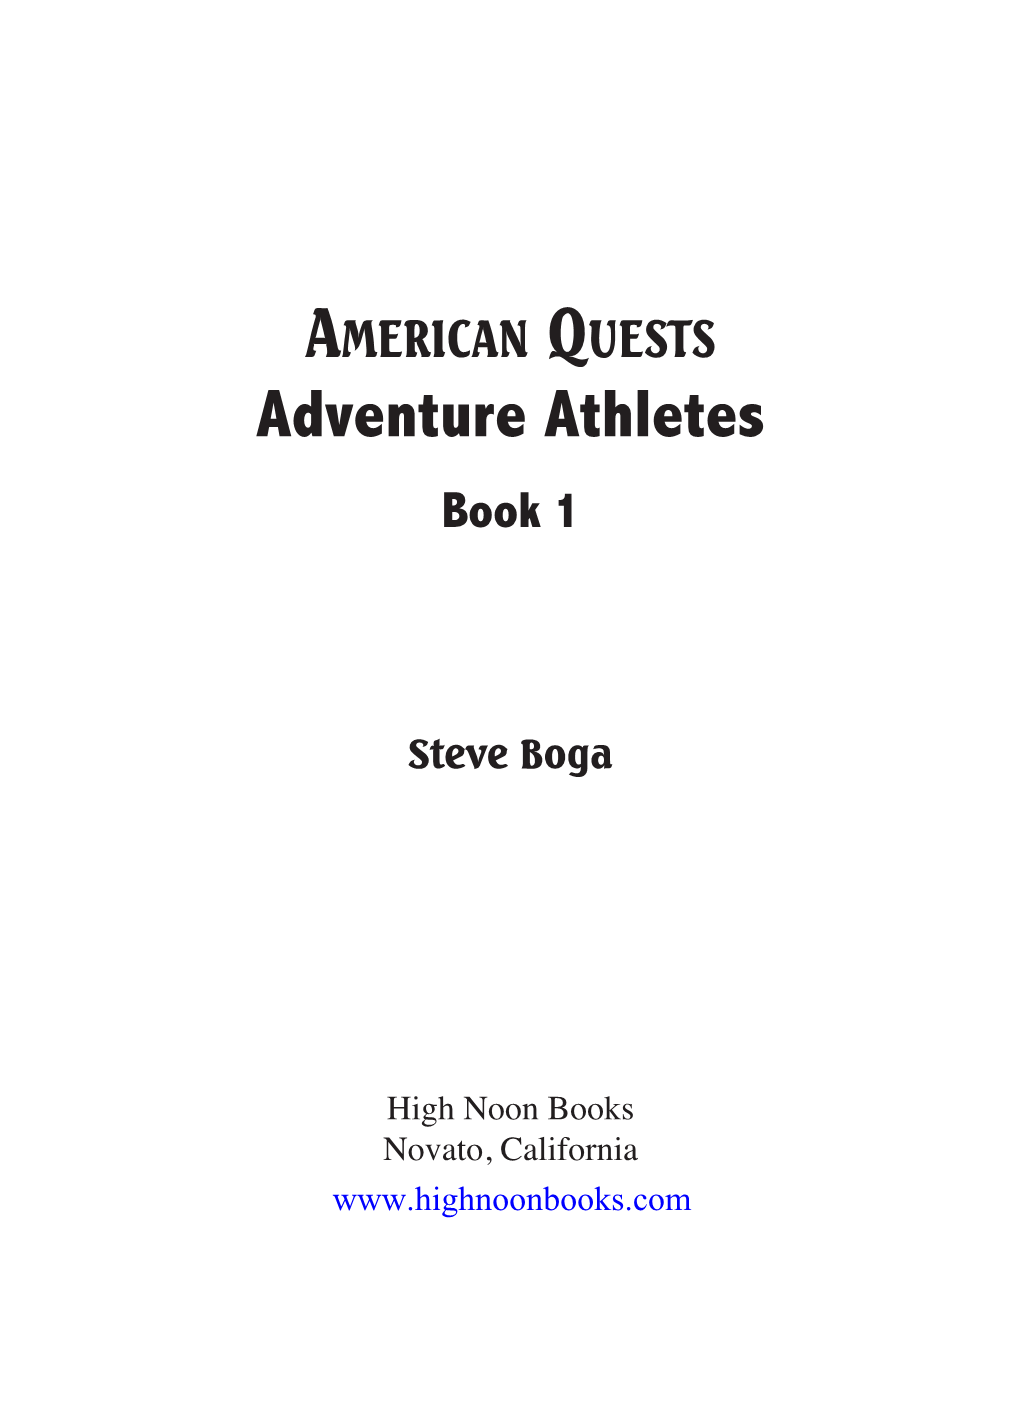 Adventure Athletes Book 1